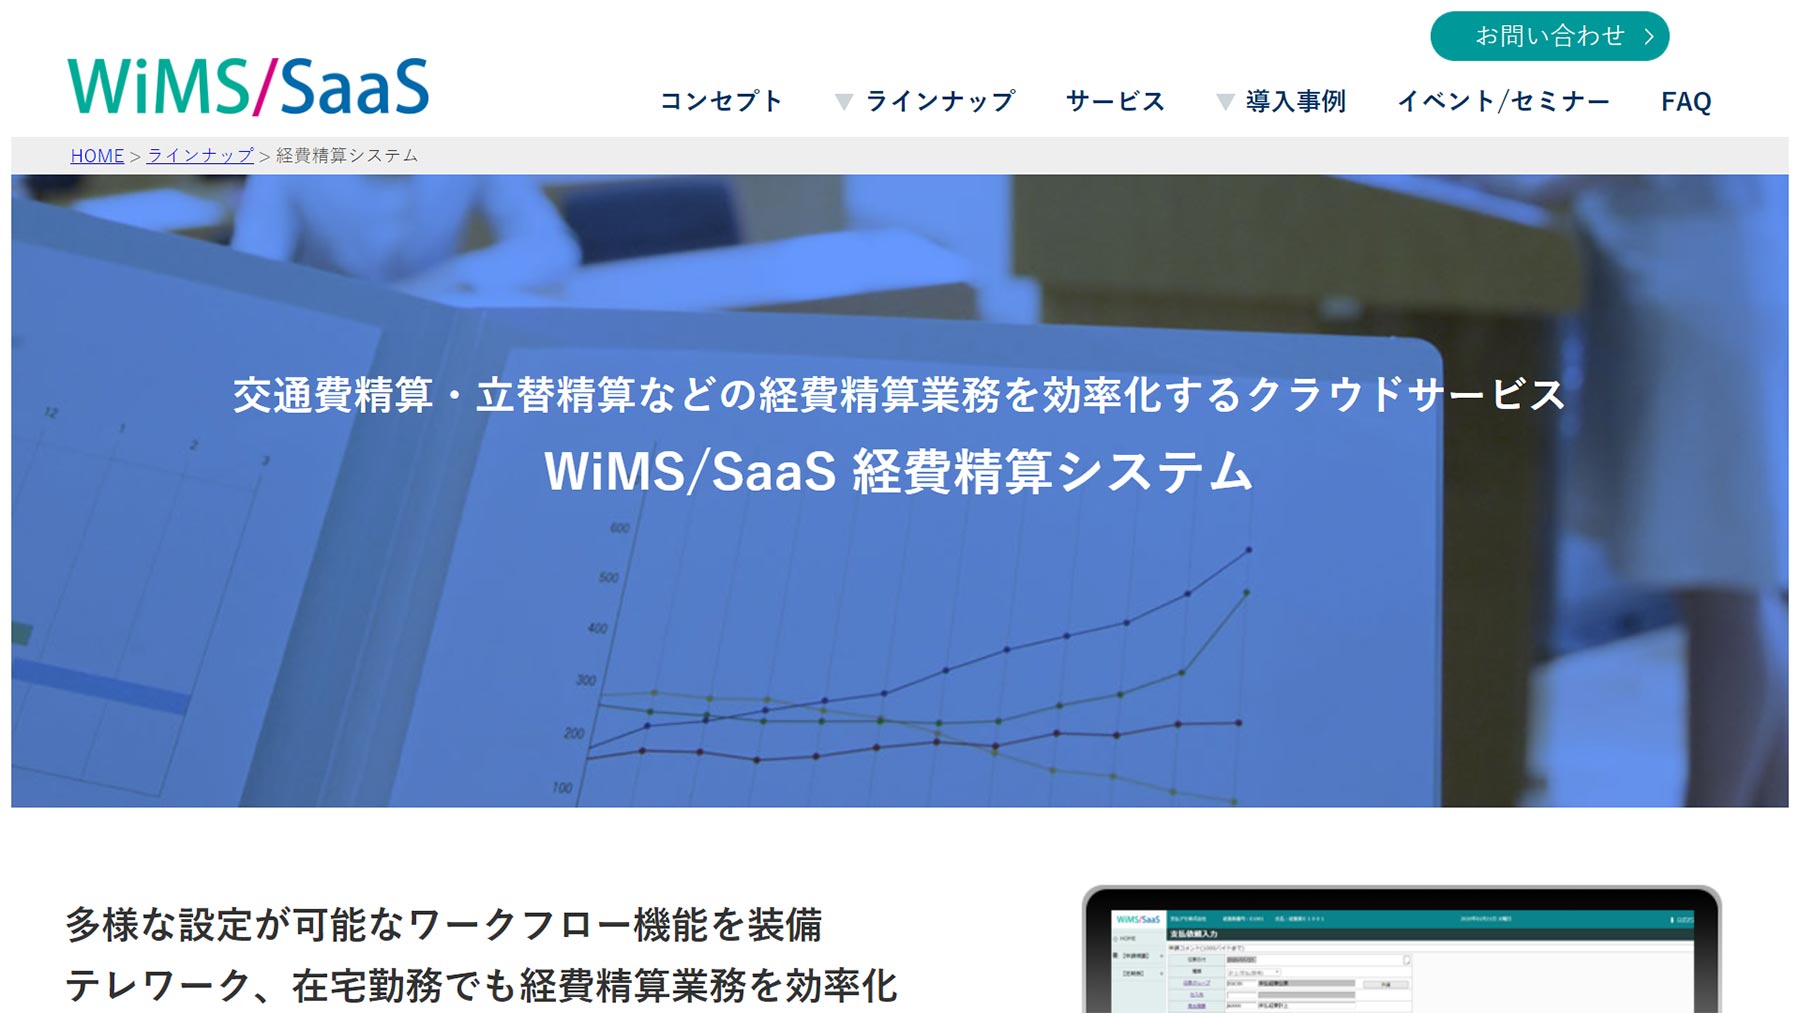 WiMS/SaaS経費精算システム